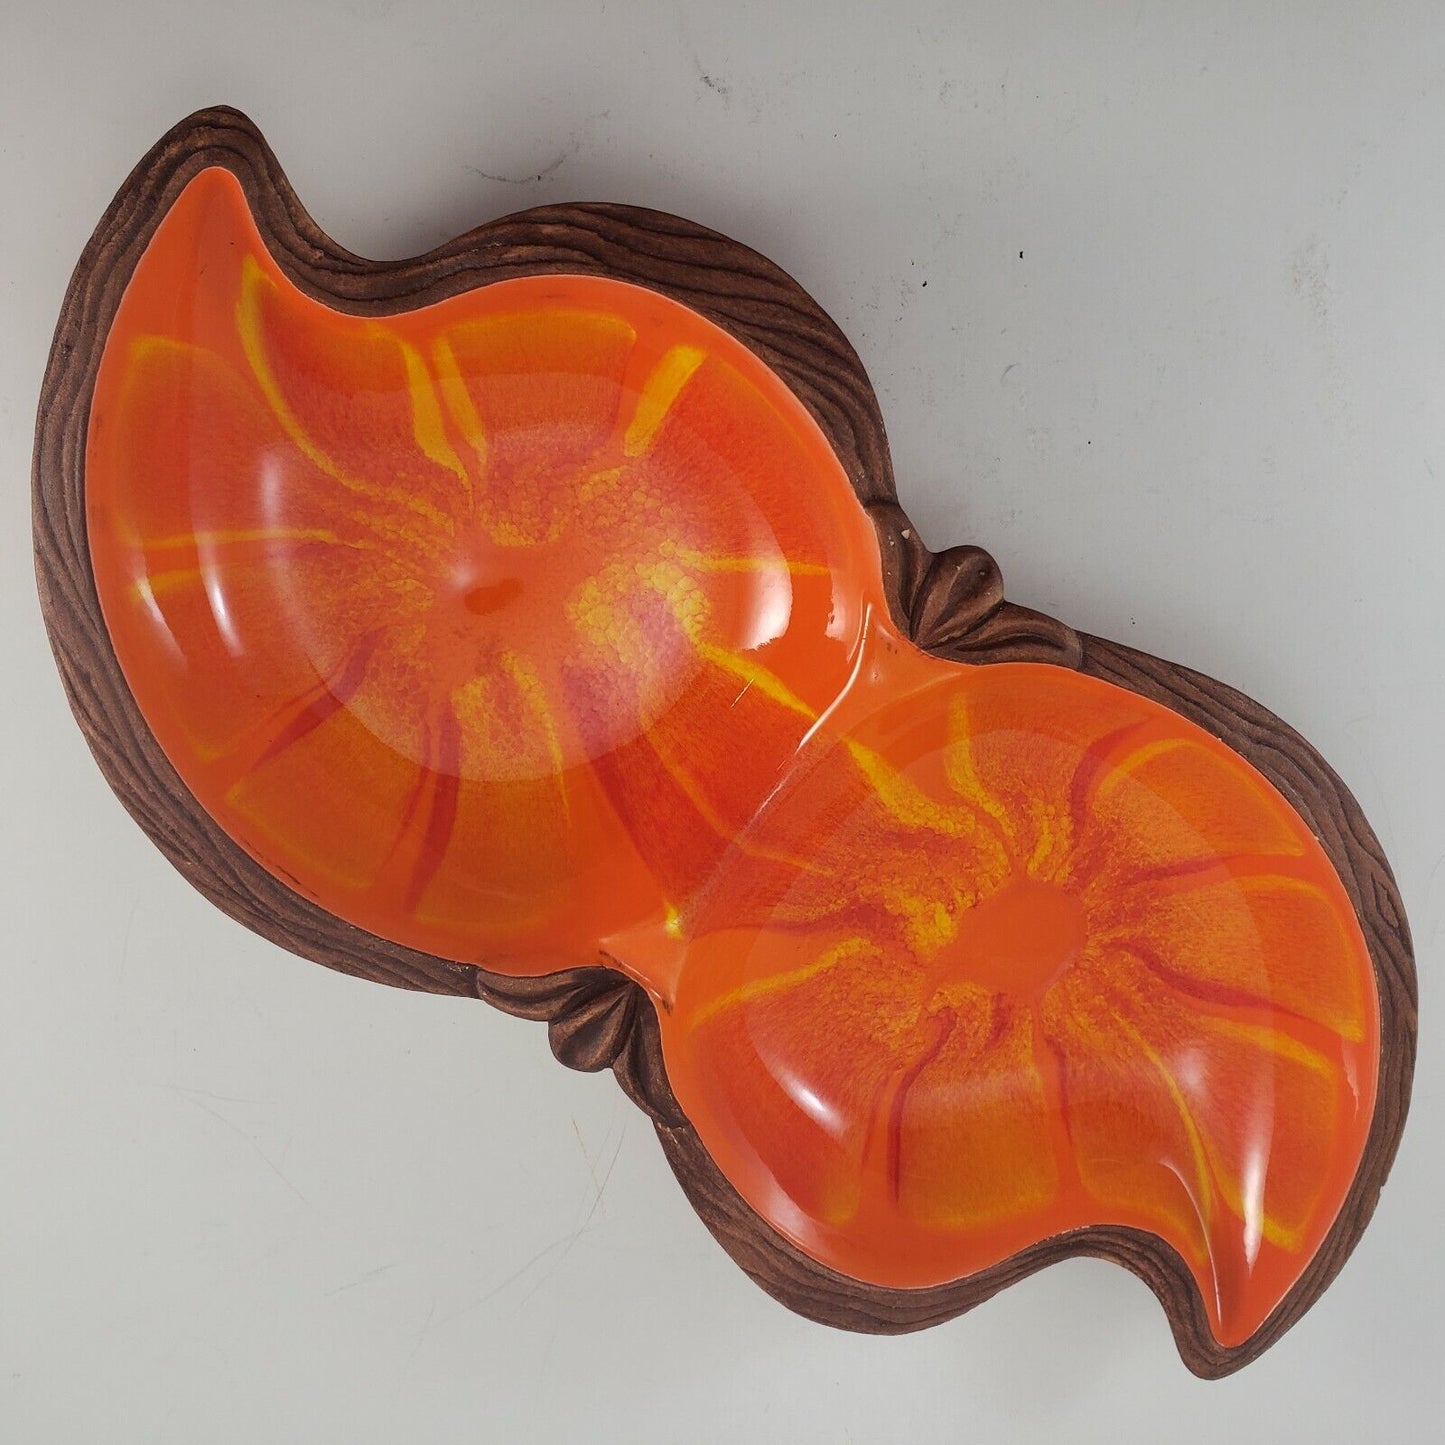 California Pottery USA 748 Divided Serving Dish Orange Swirl Glaze 1970s Vintage